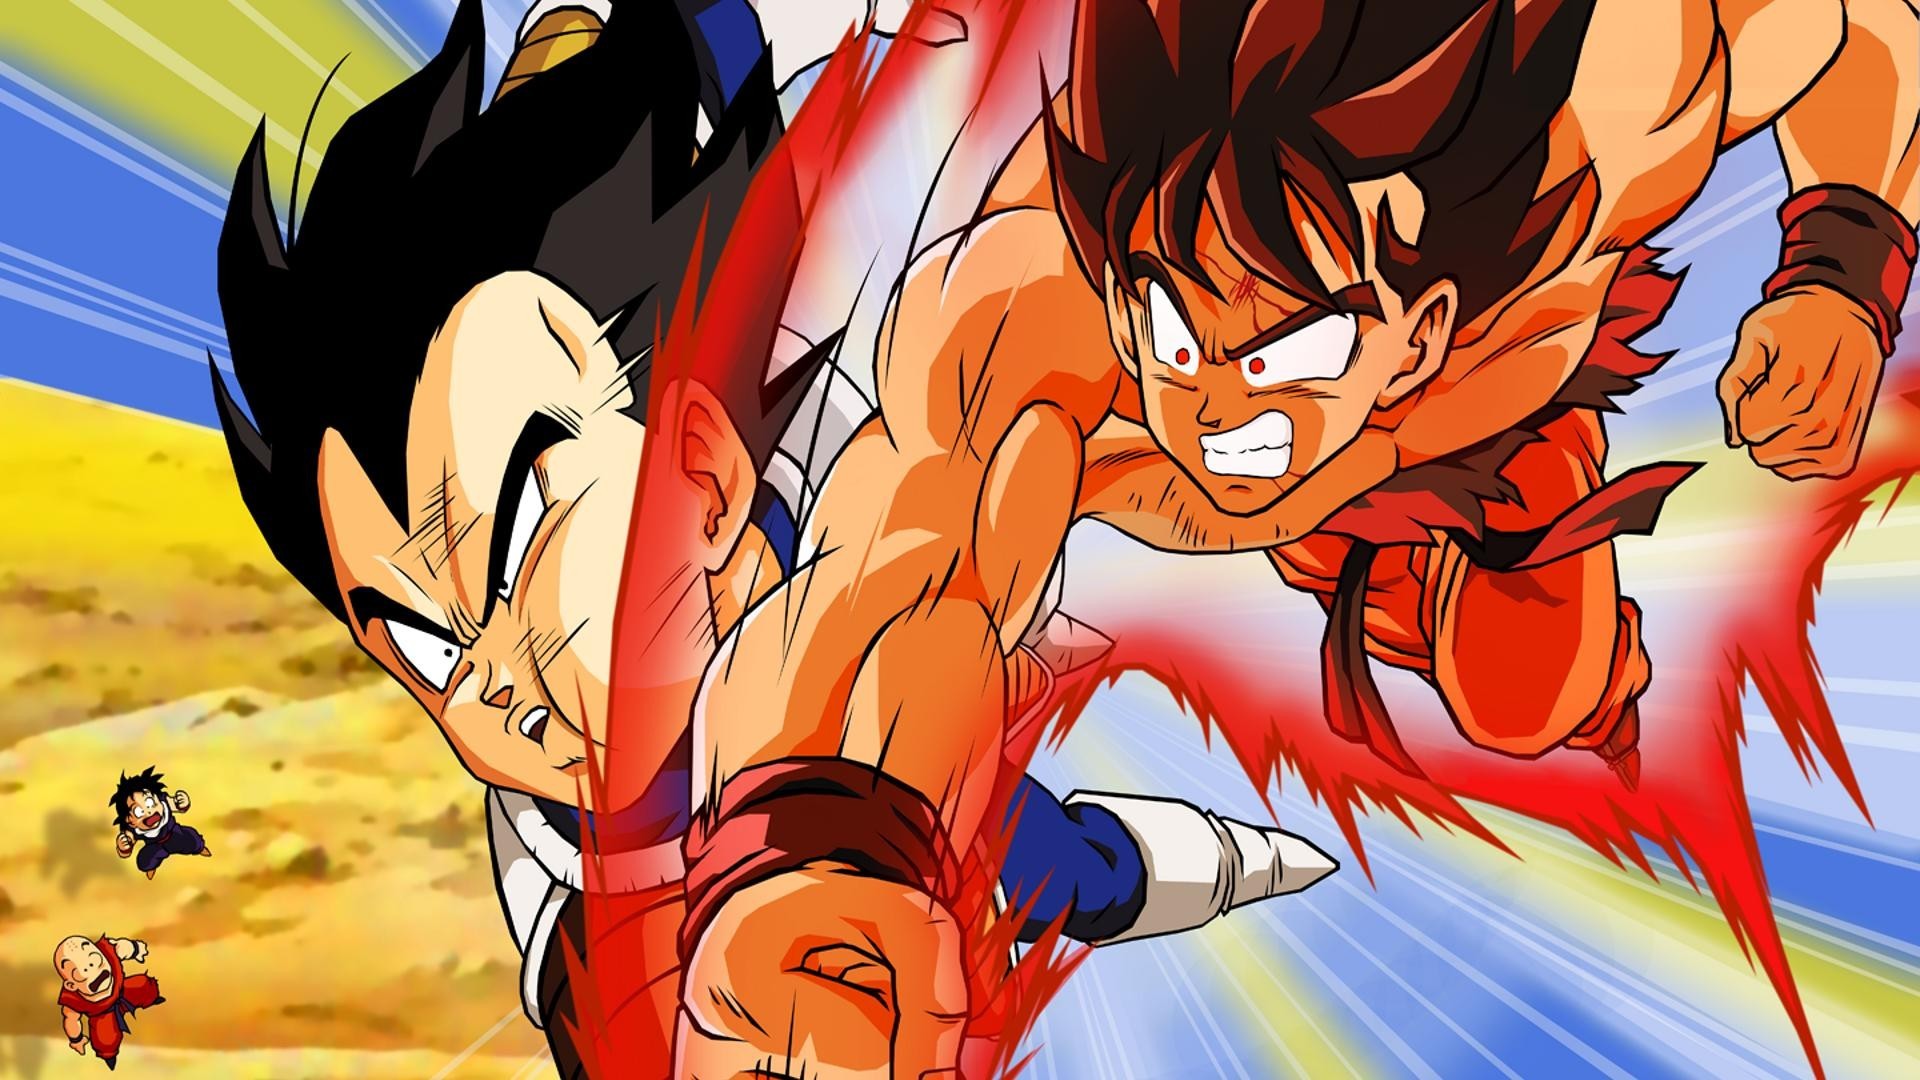 Dragon Ball Z Goku VS Vegeta Fighting wallpapers and Goku VS Vegeta Fighting backgrounds for your computer desktop. Find Goku VS Vegeta Fighting pictures